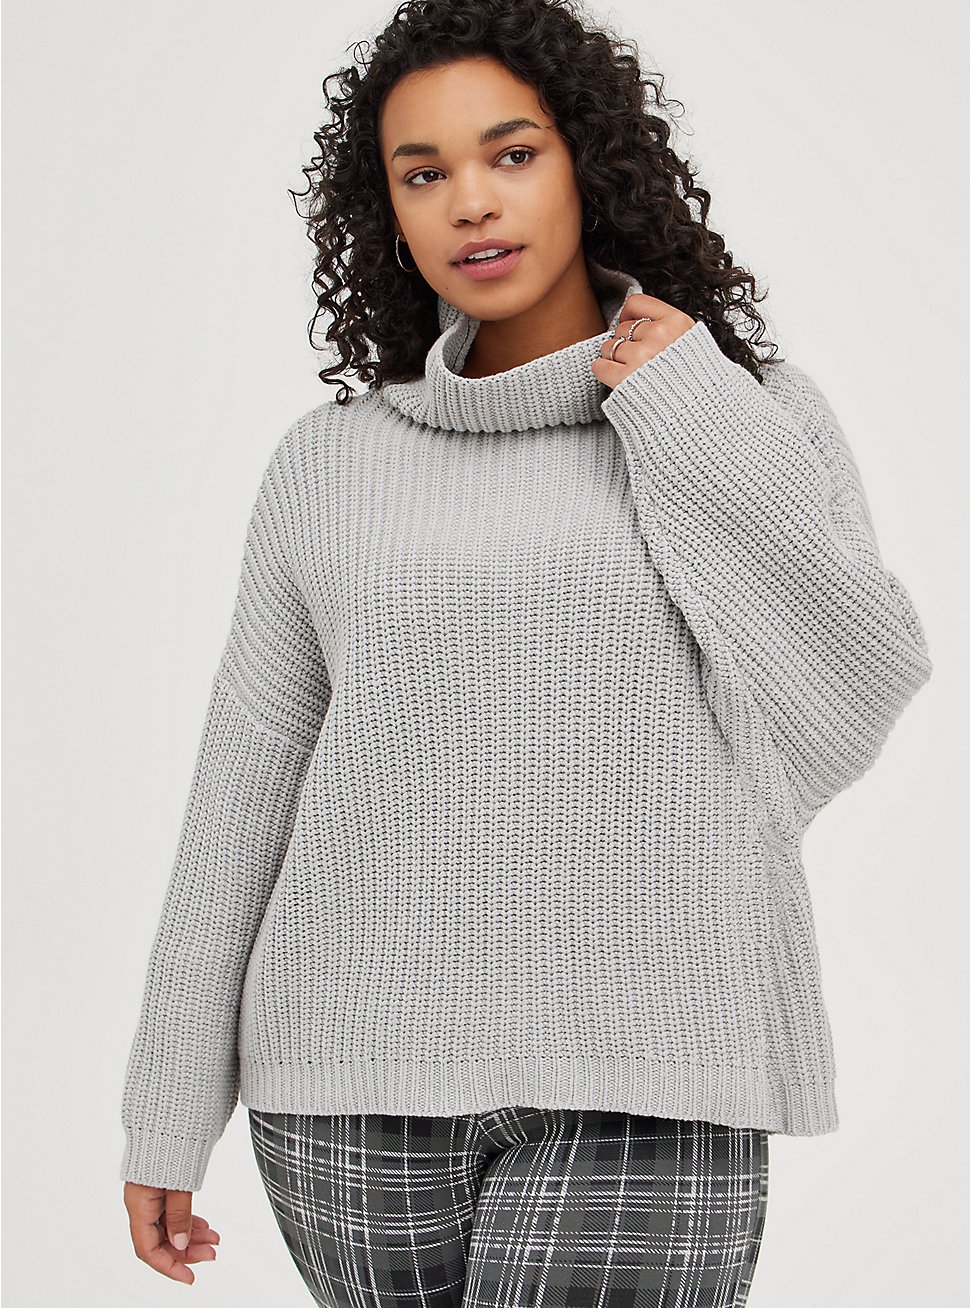 Plus Size Drop Shoulder Turtle Neck Sweater - Light Grey, LIGHT GREY, hi-res